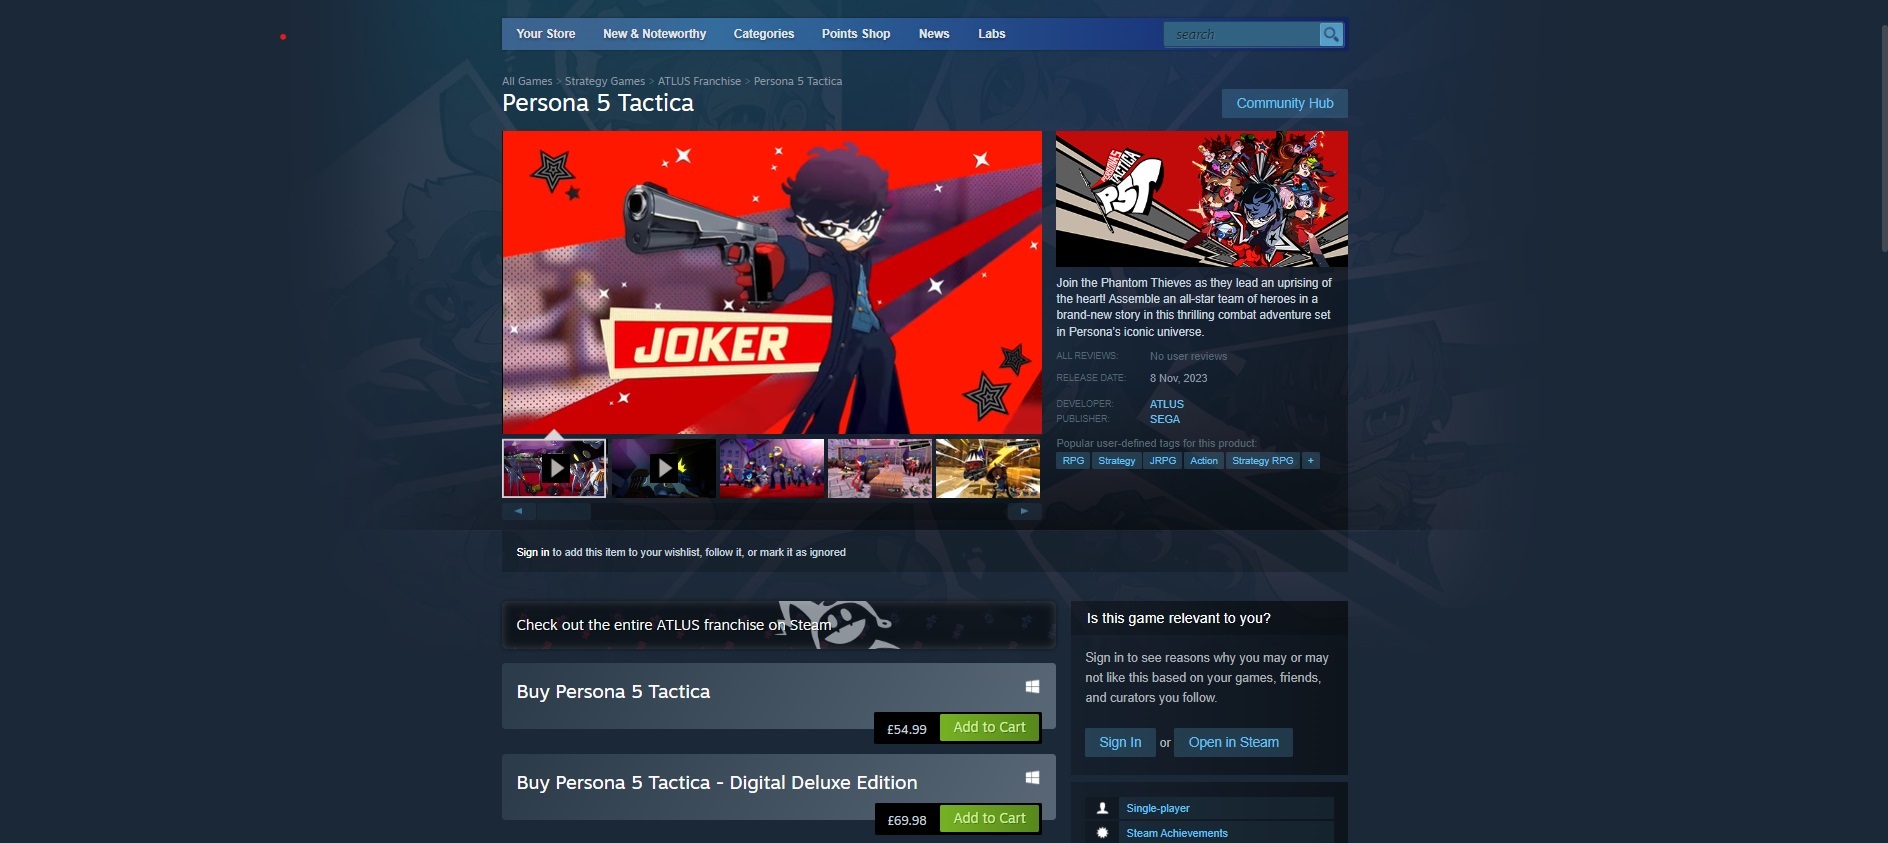 Persona 5 Tactica announced at Xbox Games Showcase